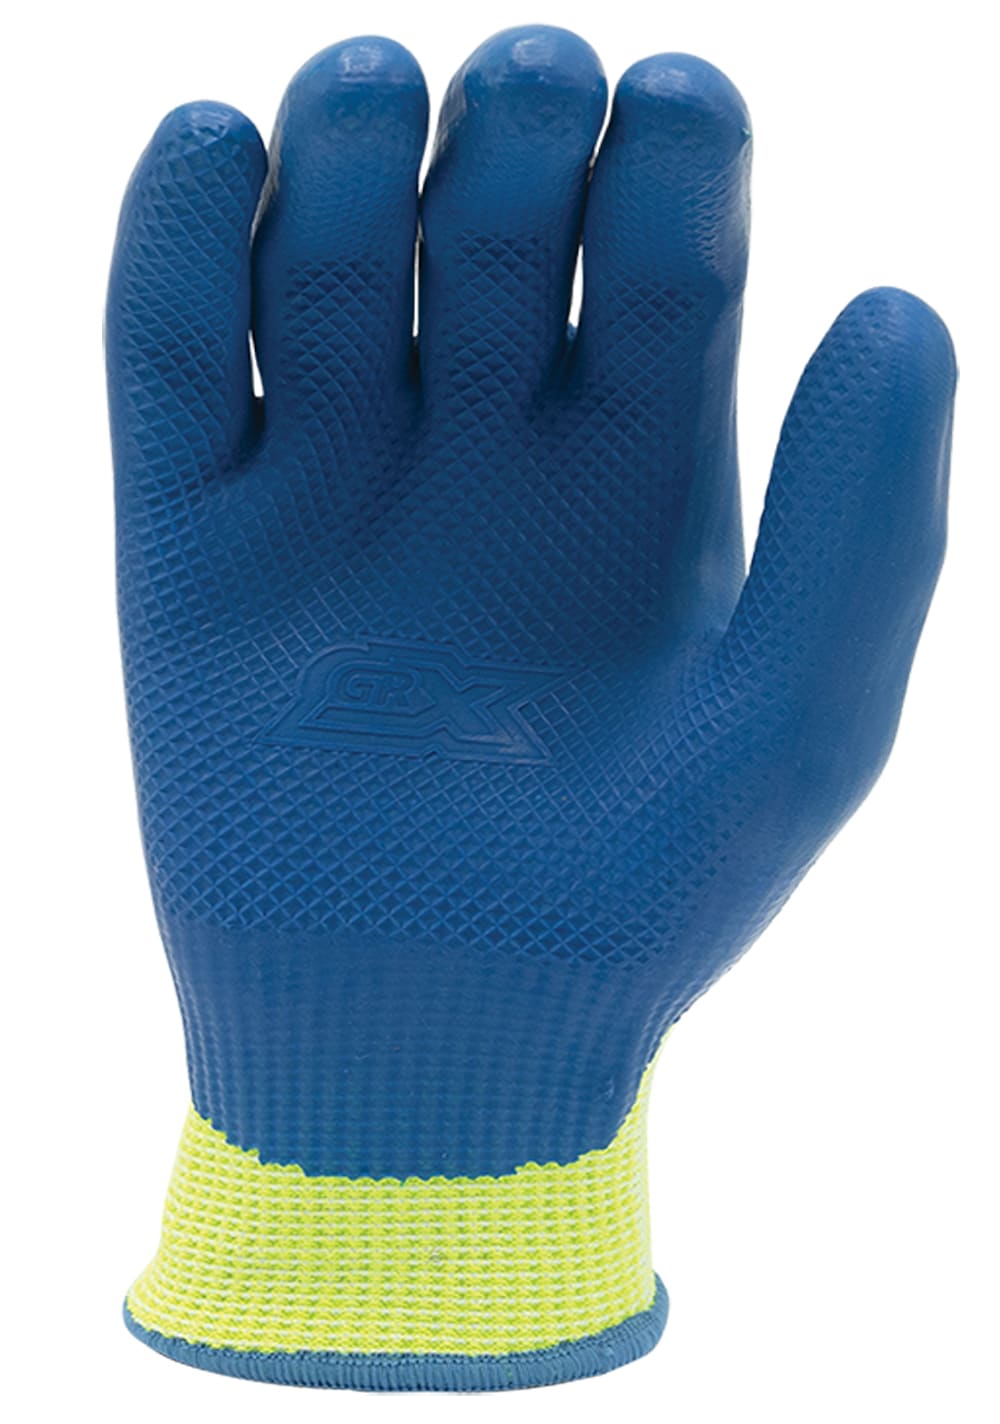 GRX Mens HPPE Latex Dipped Construction Gloves, X-Large | GRXCUT634XLHIB